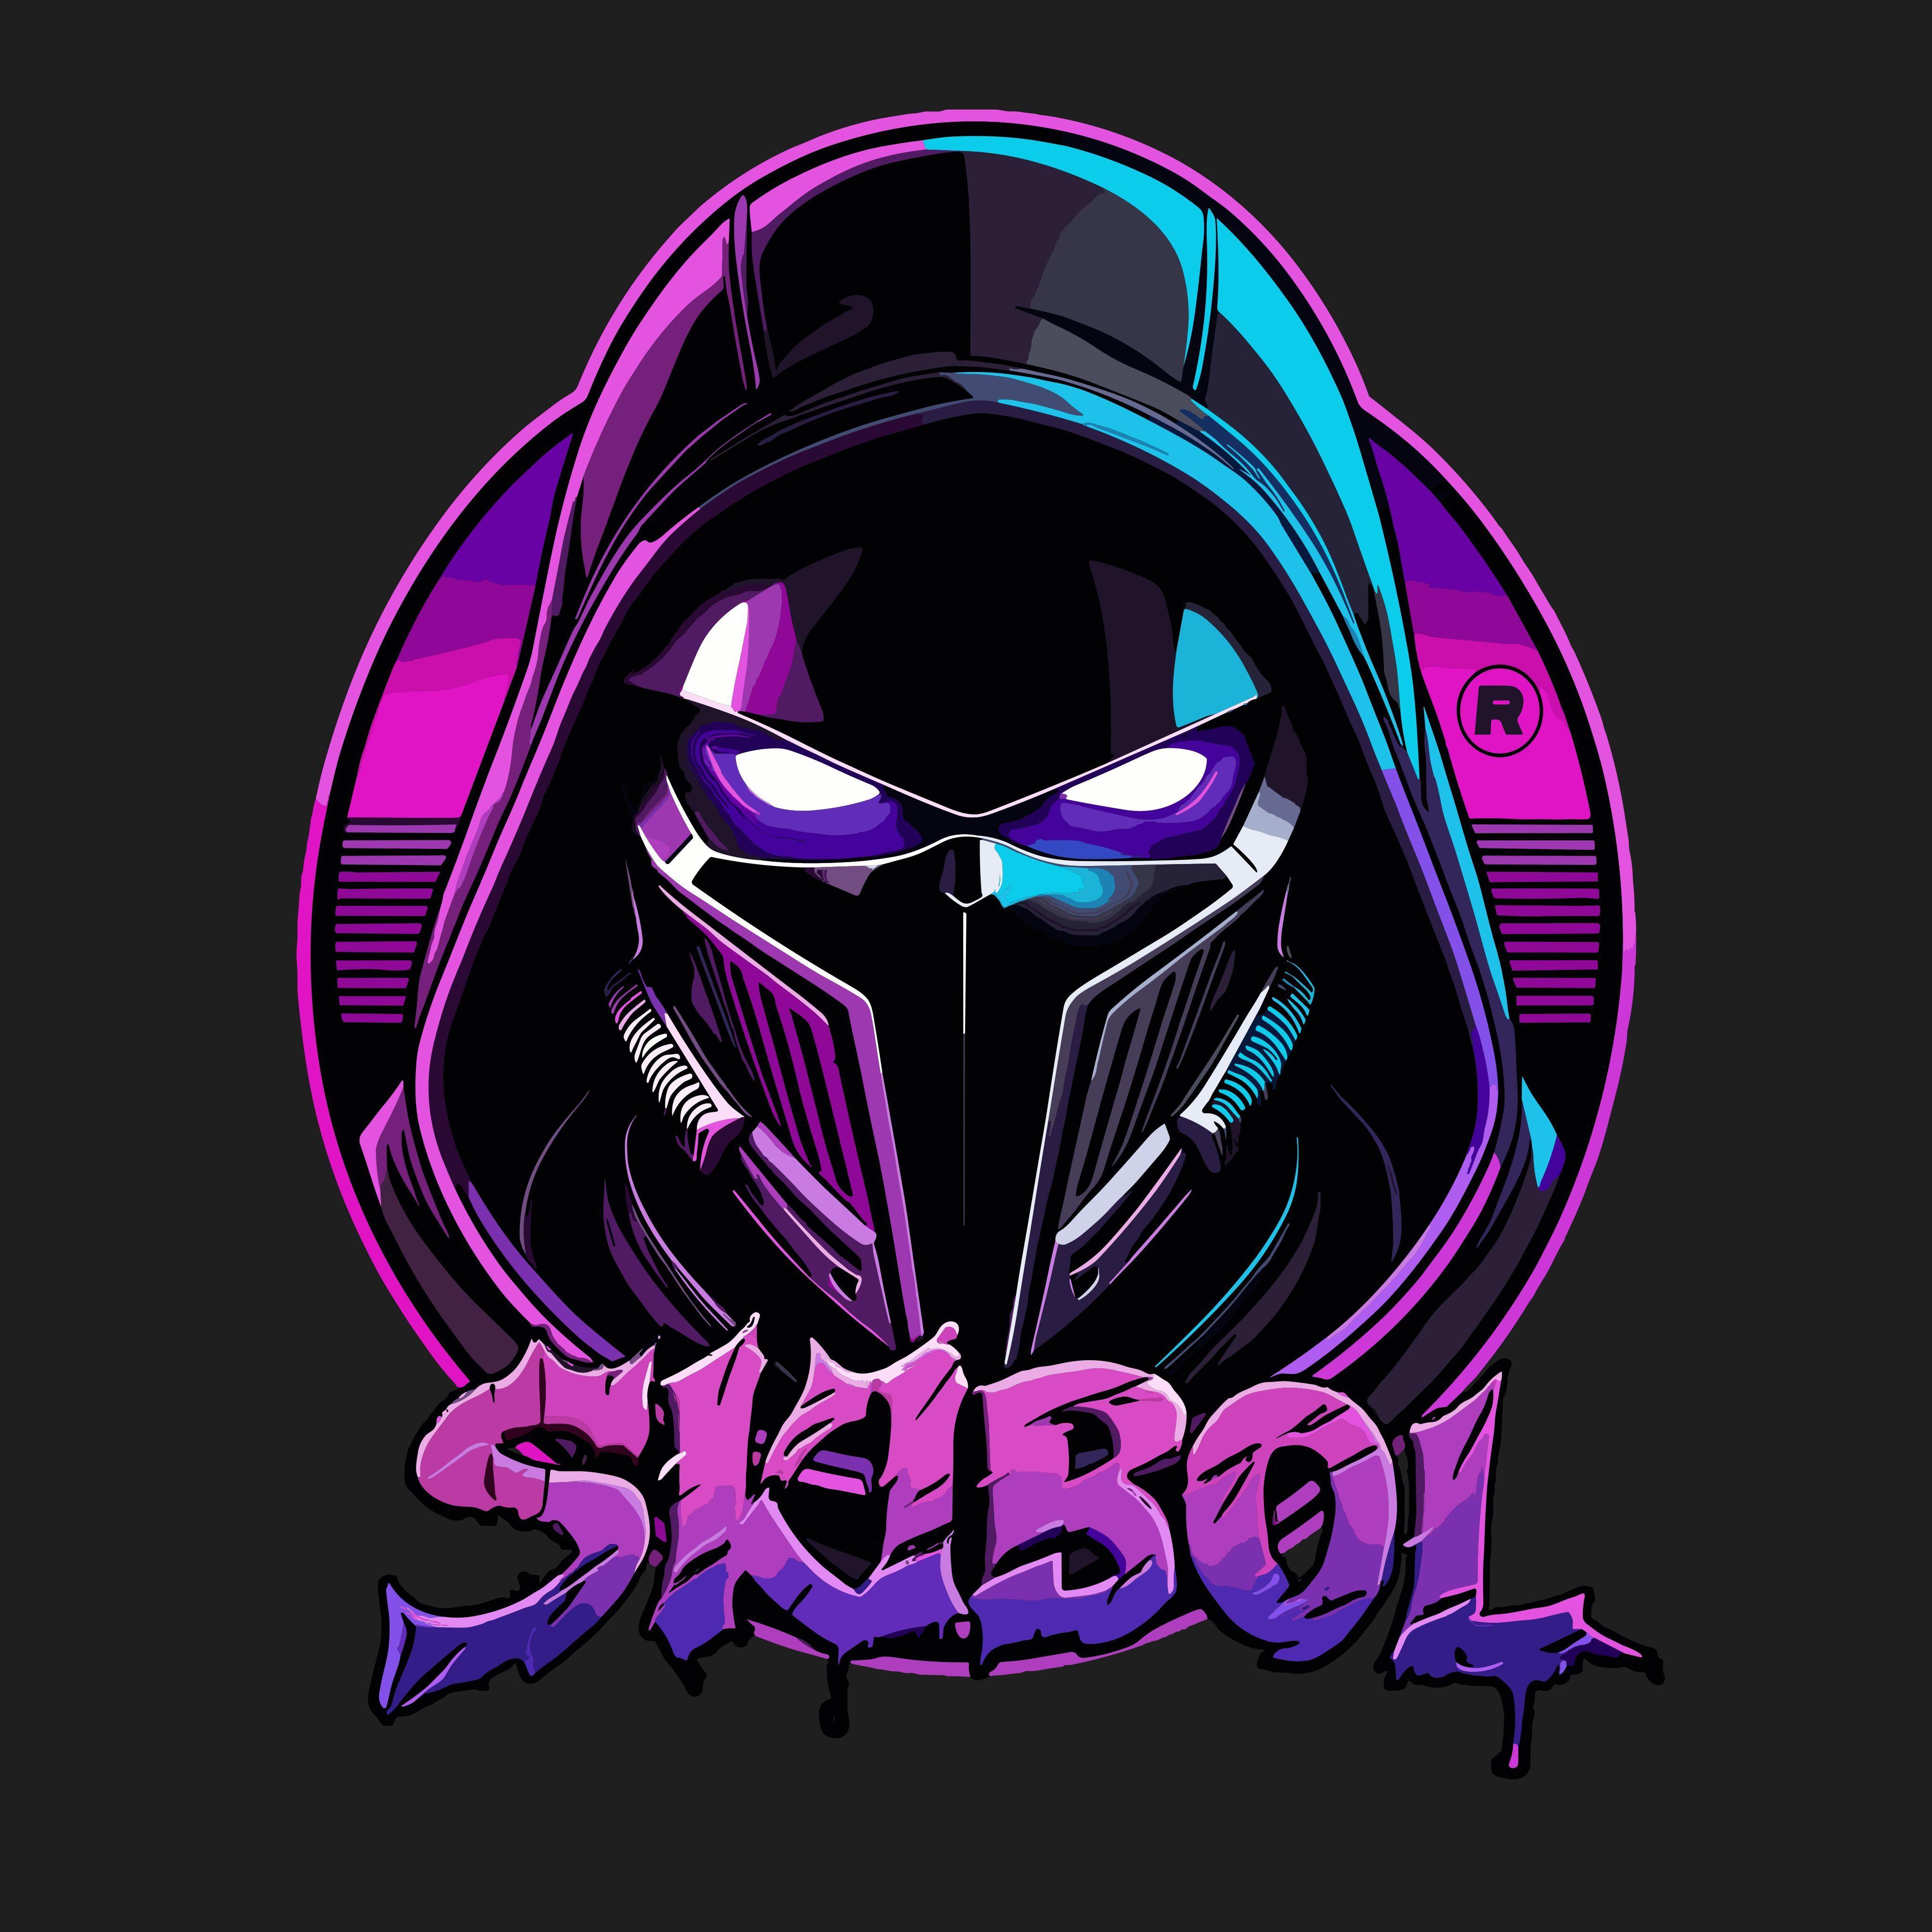 Player Skibolxy avatar